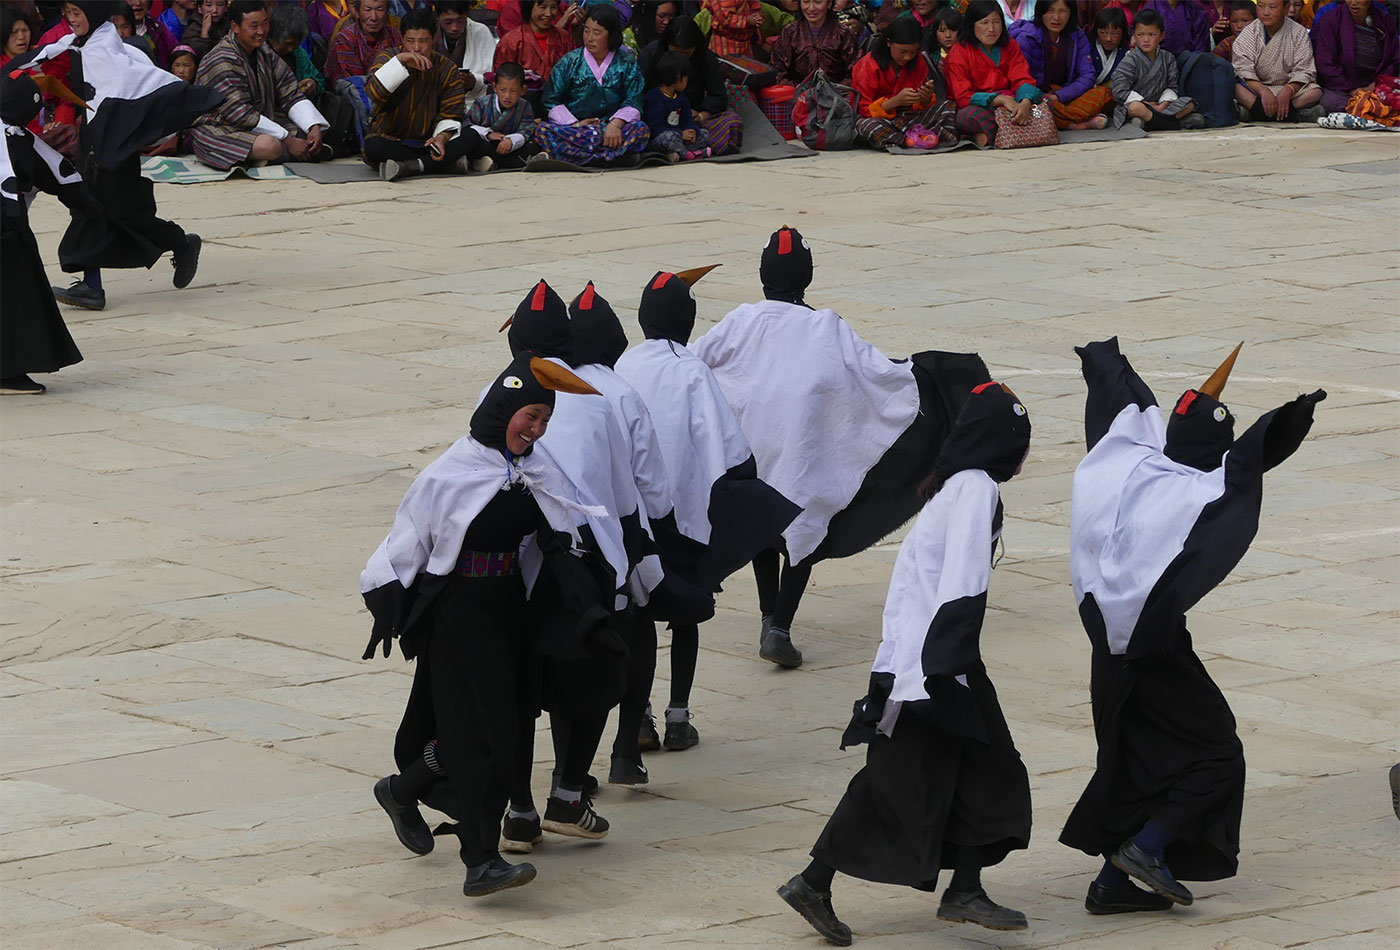 bhutan tour testimonials